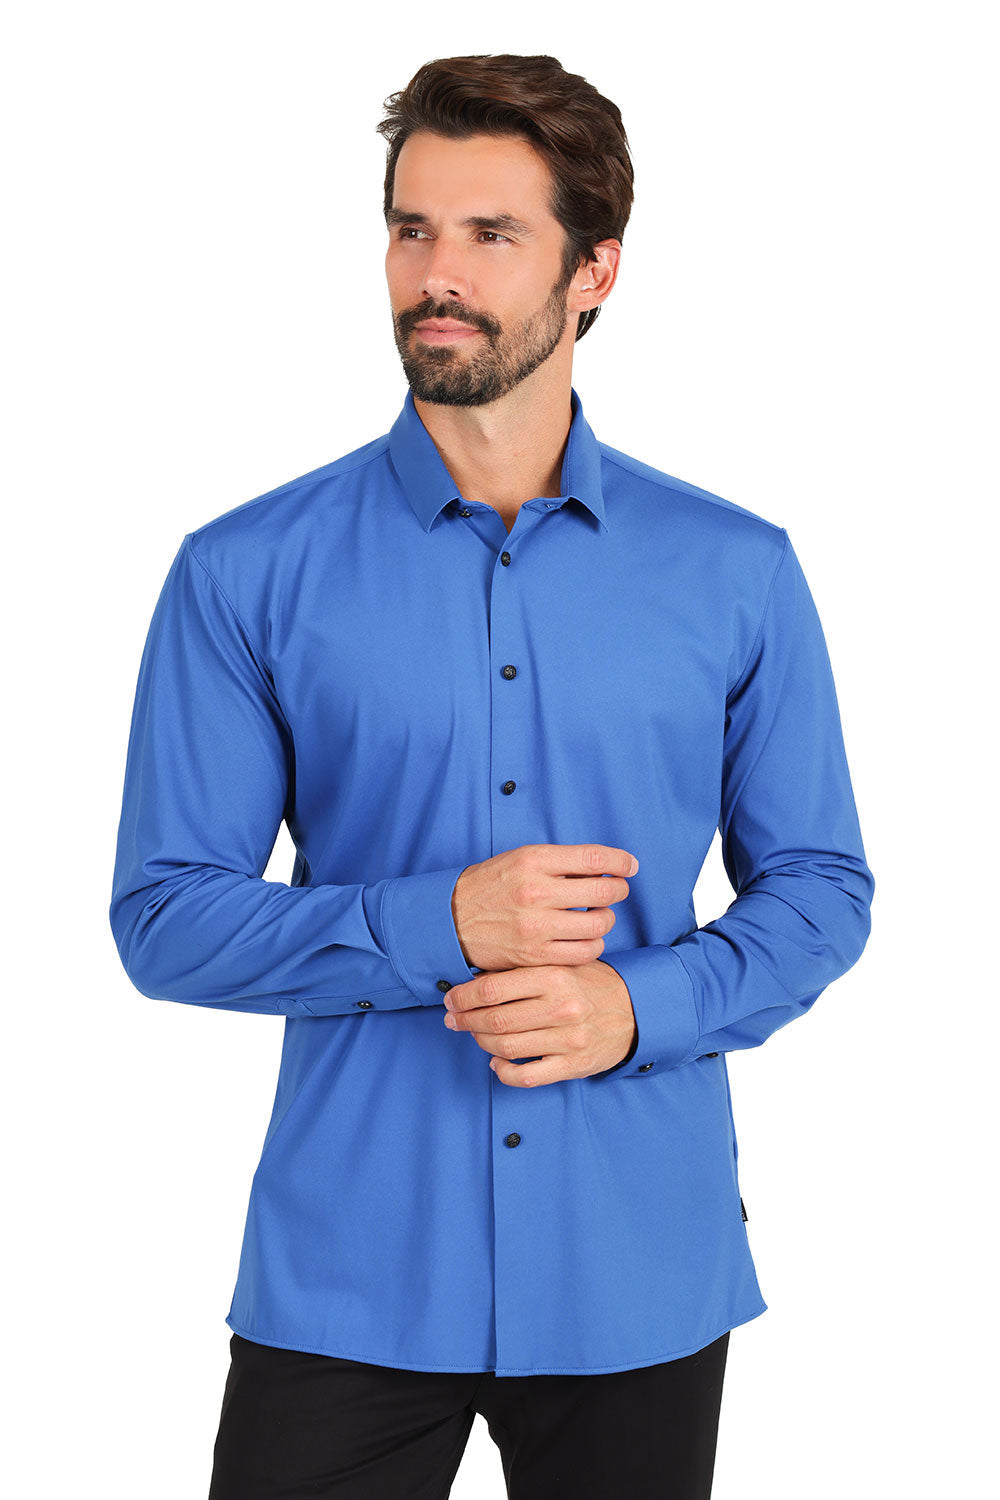 Barabas Men's Premium No Stitches Long Sleeves Shirts 2B400 Royal Blue